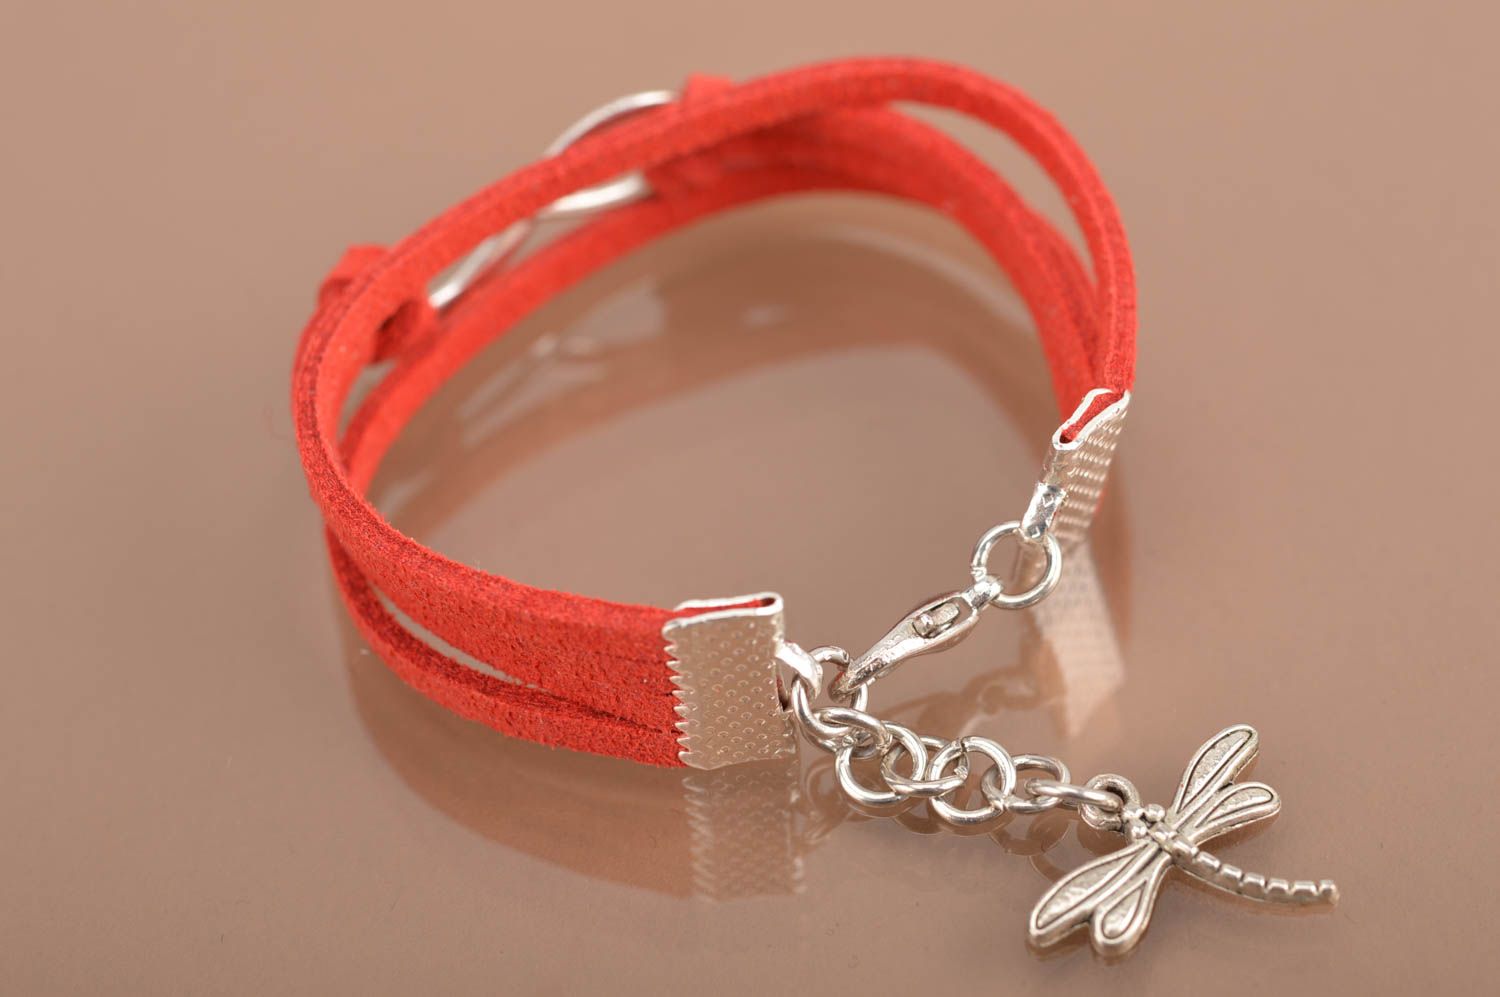 Stylish handmade suede cord bracelet charm bracelet designs leather jewelry photo 5